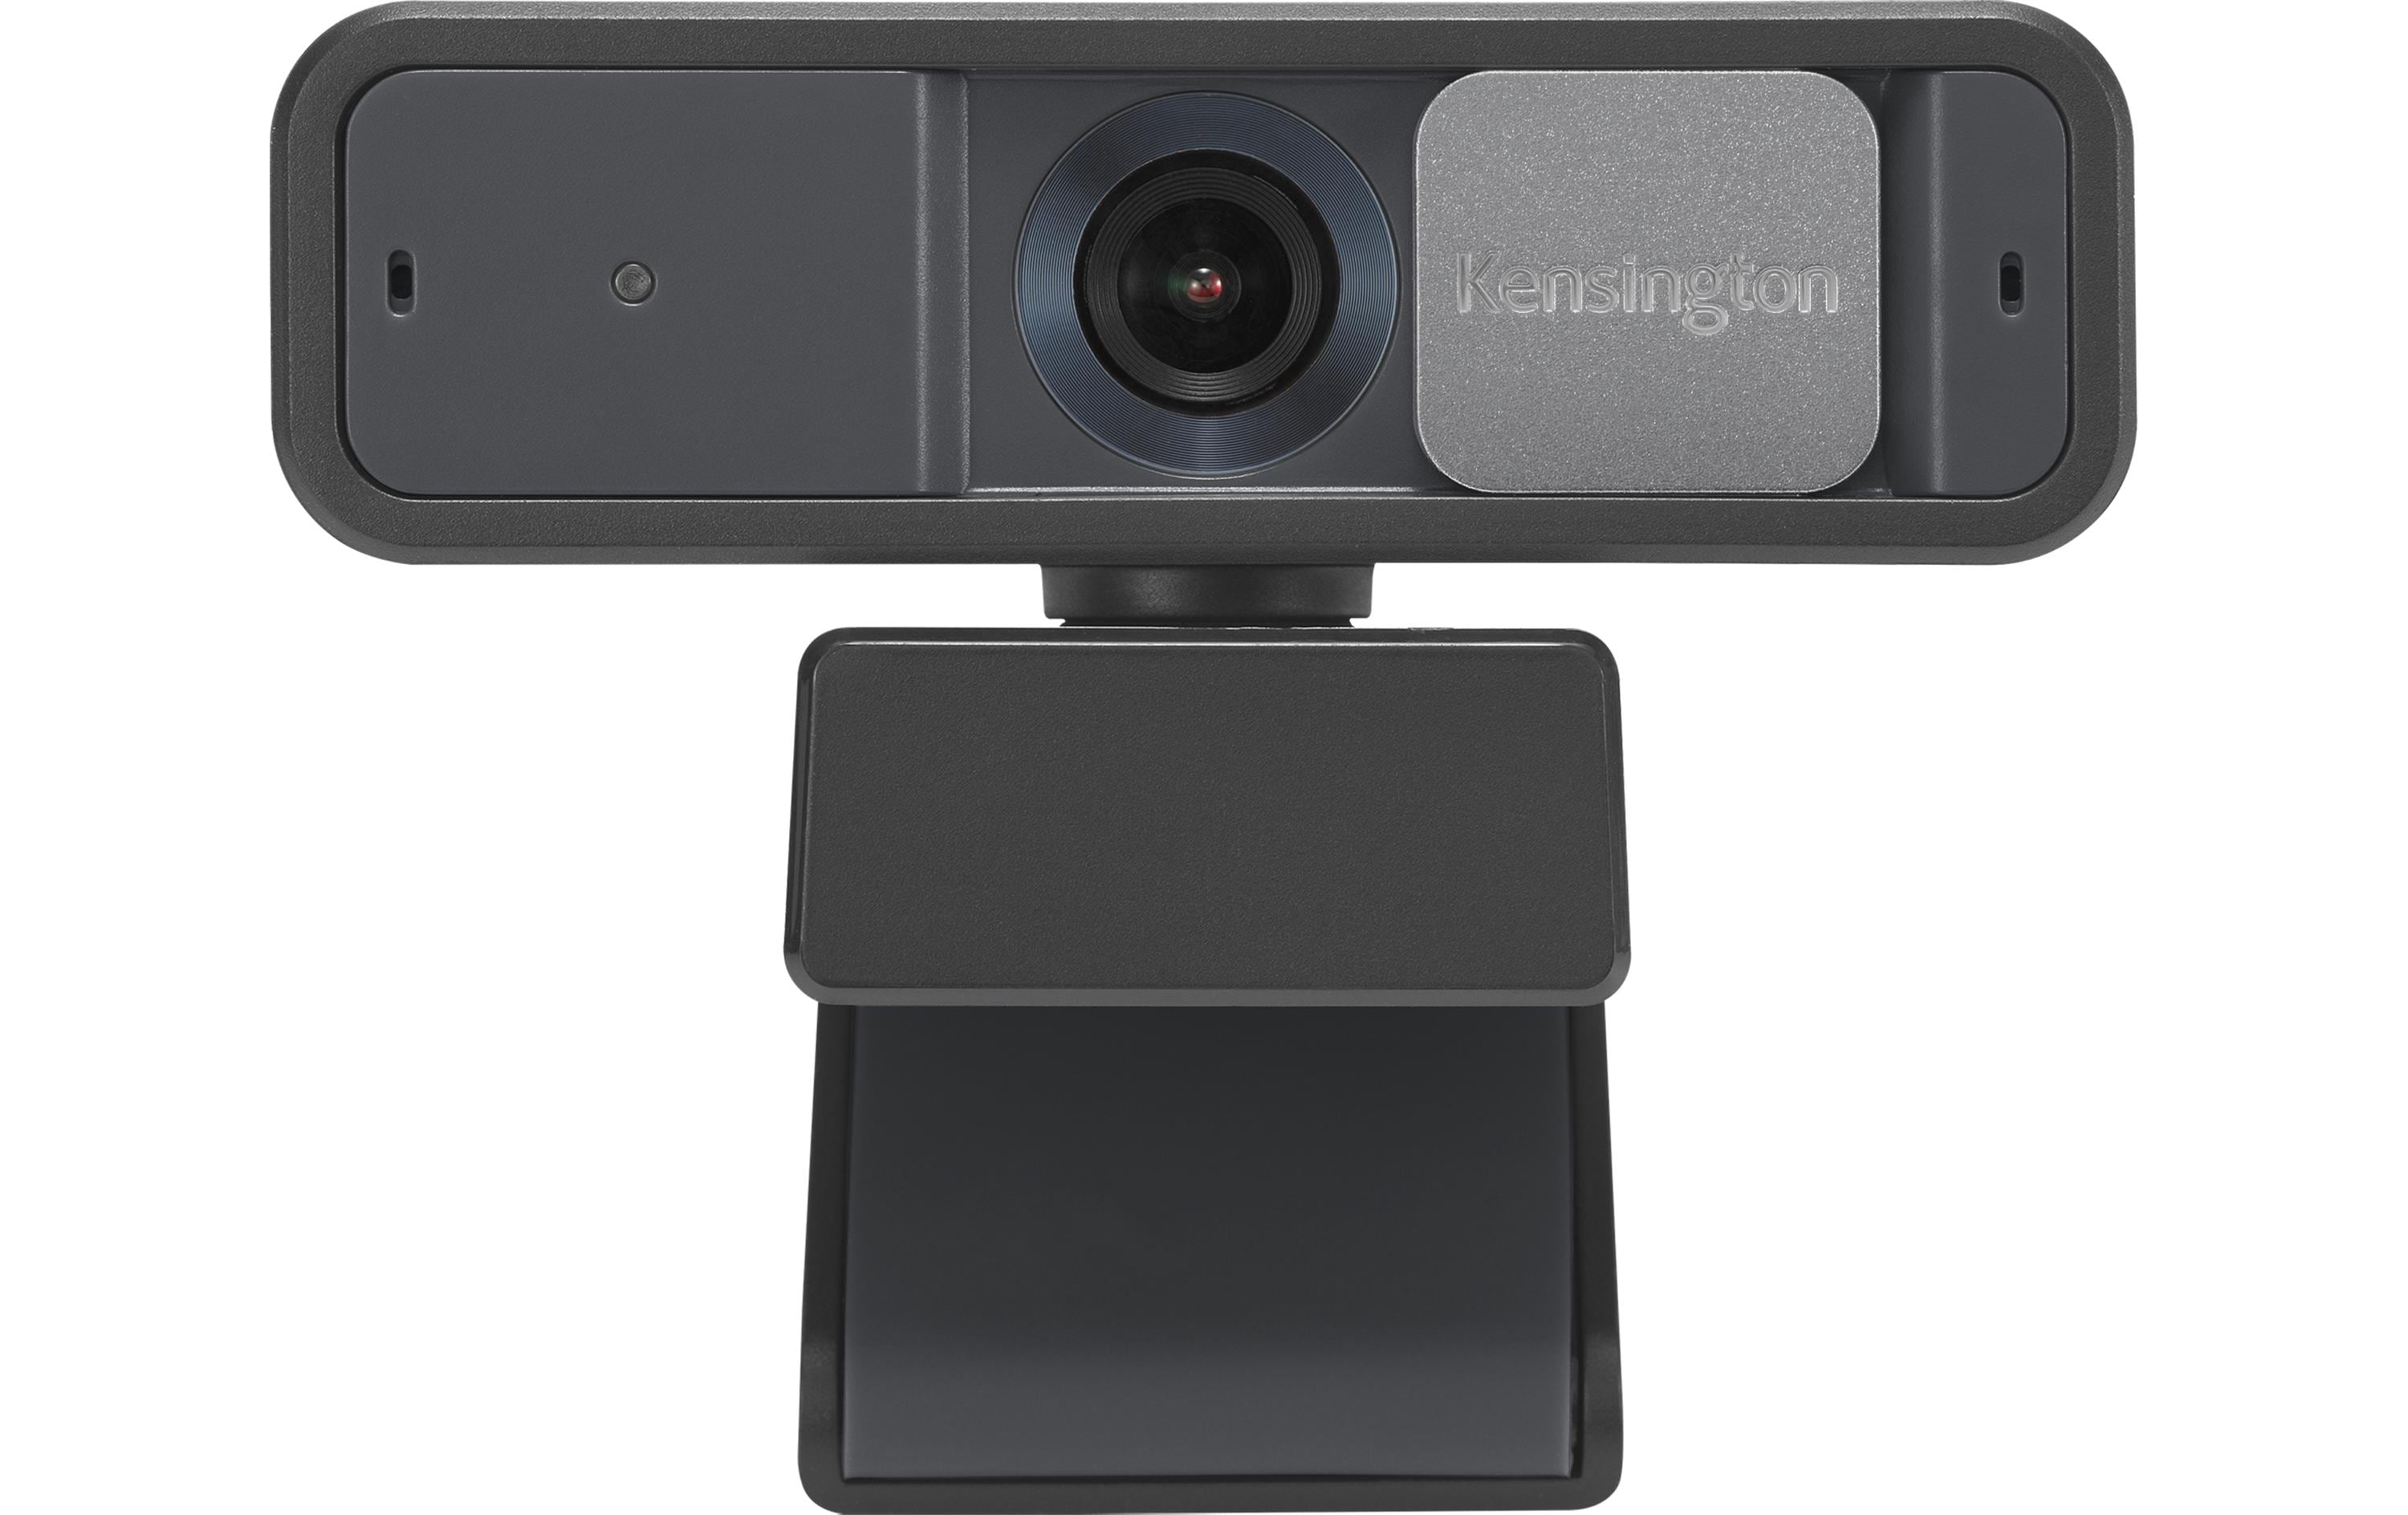 Kensington Webcam W2050